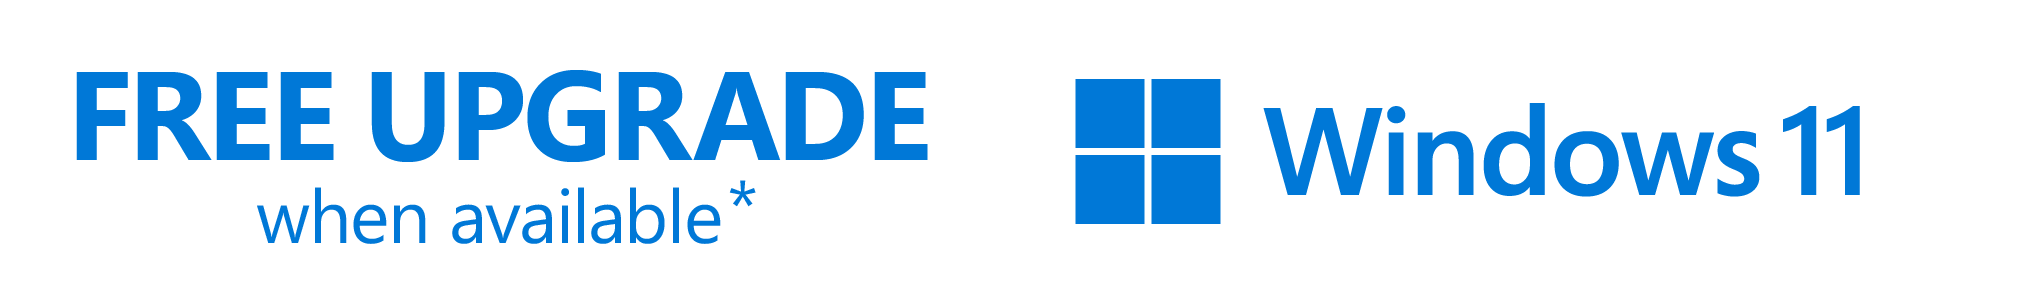 Windows 11 Free Upgrade Banner